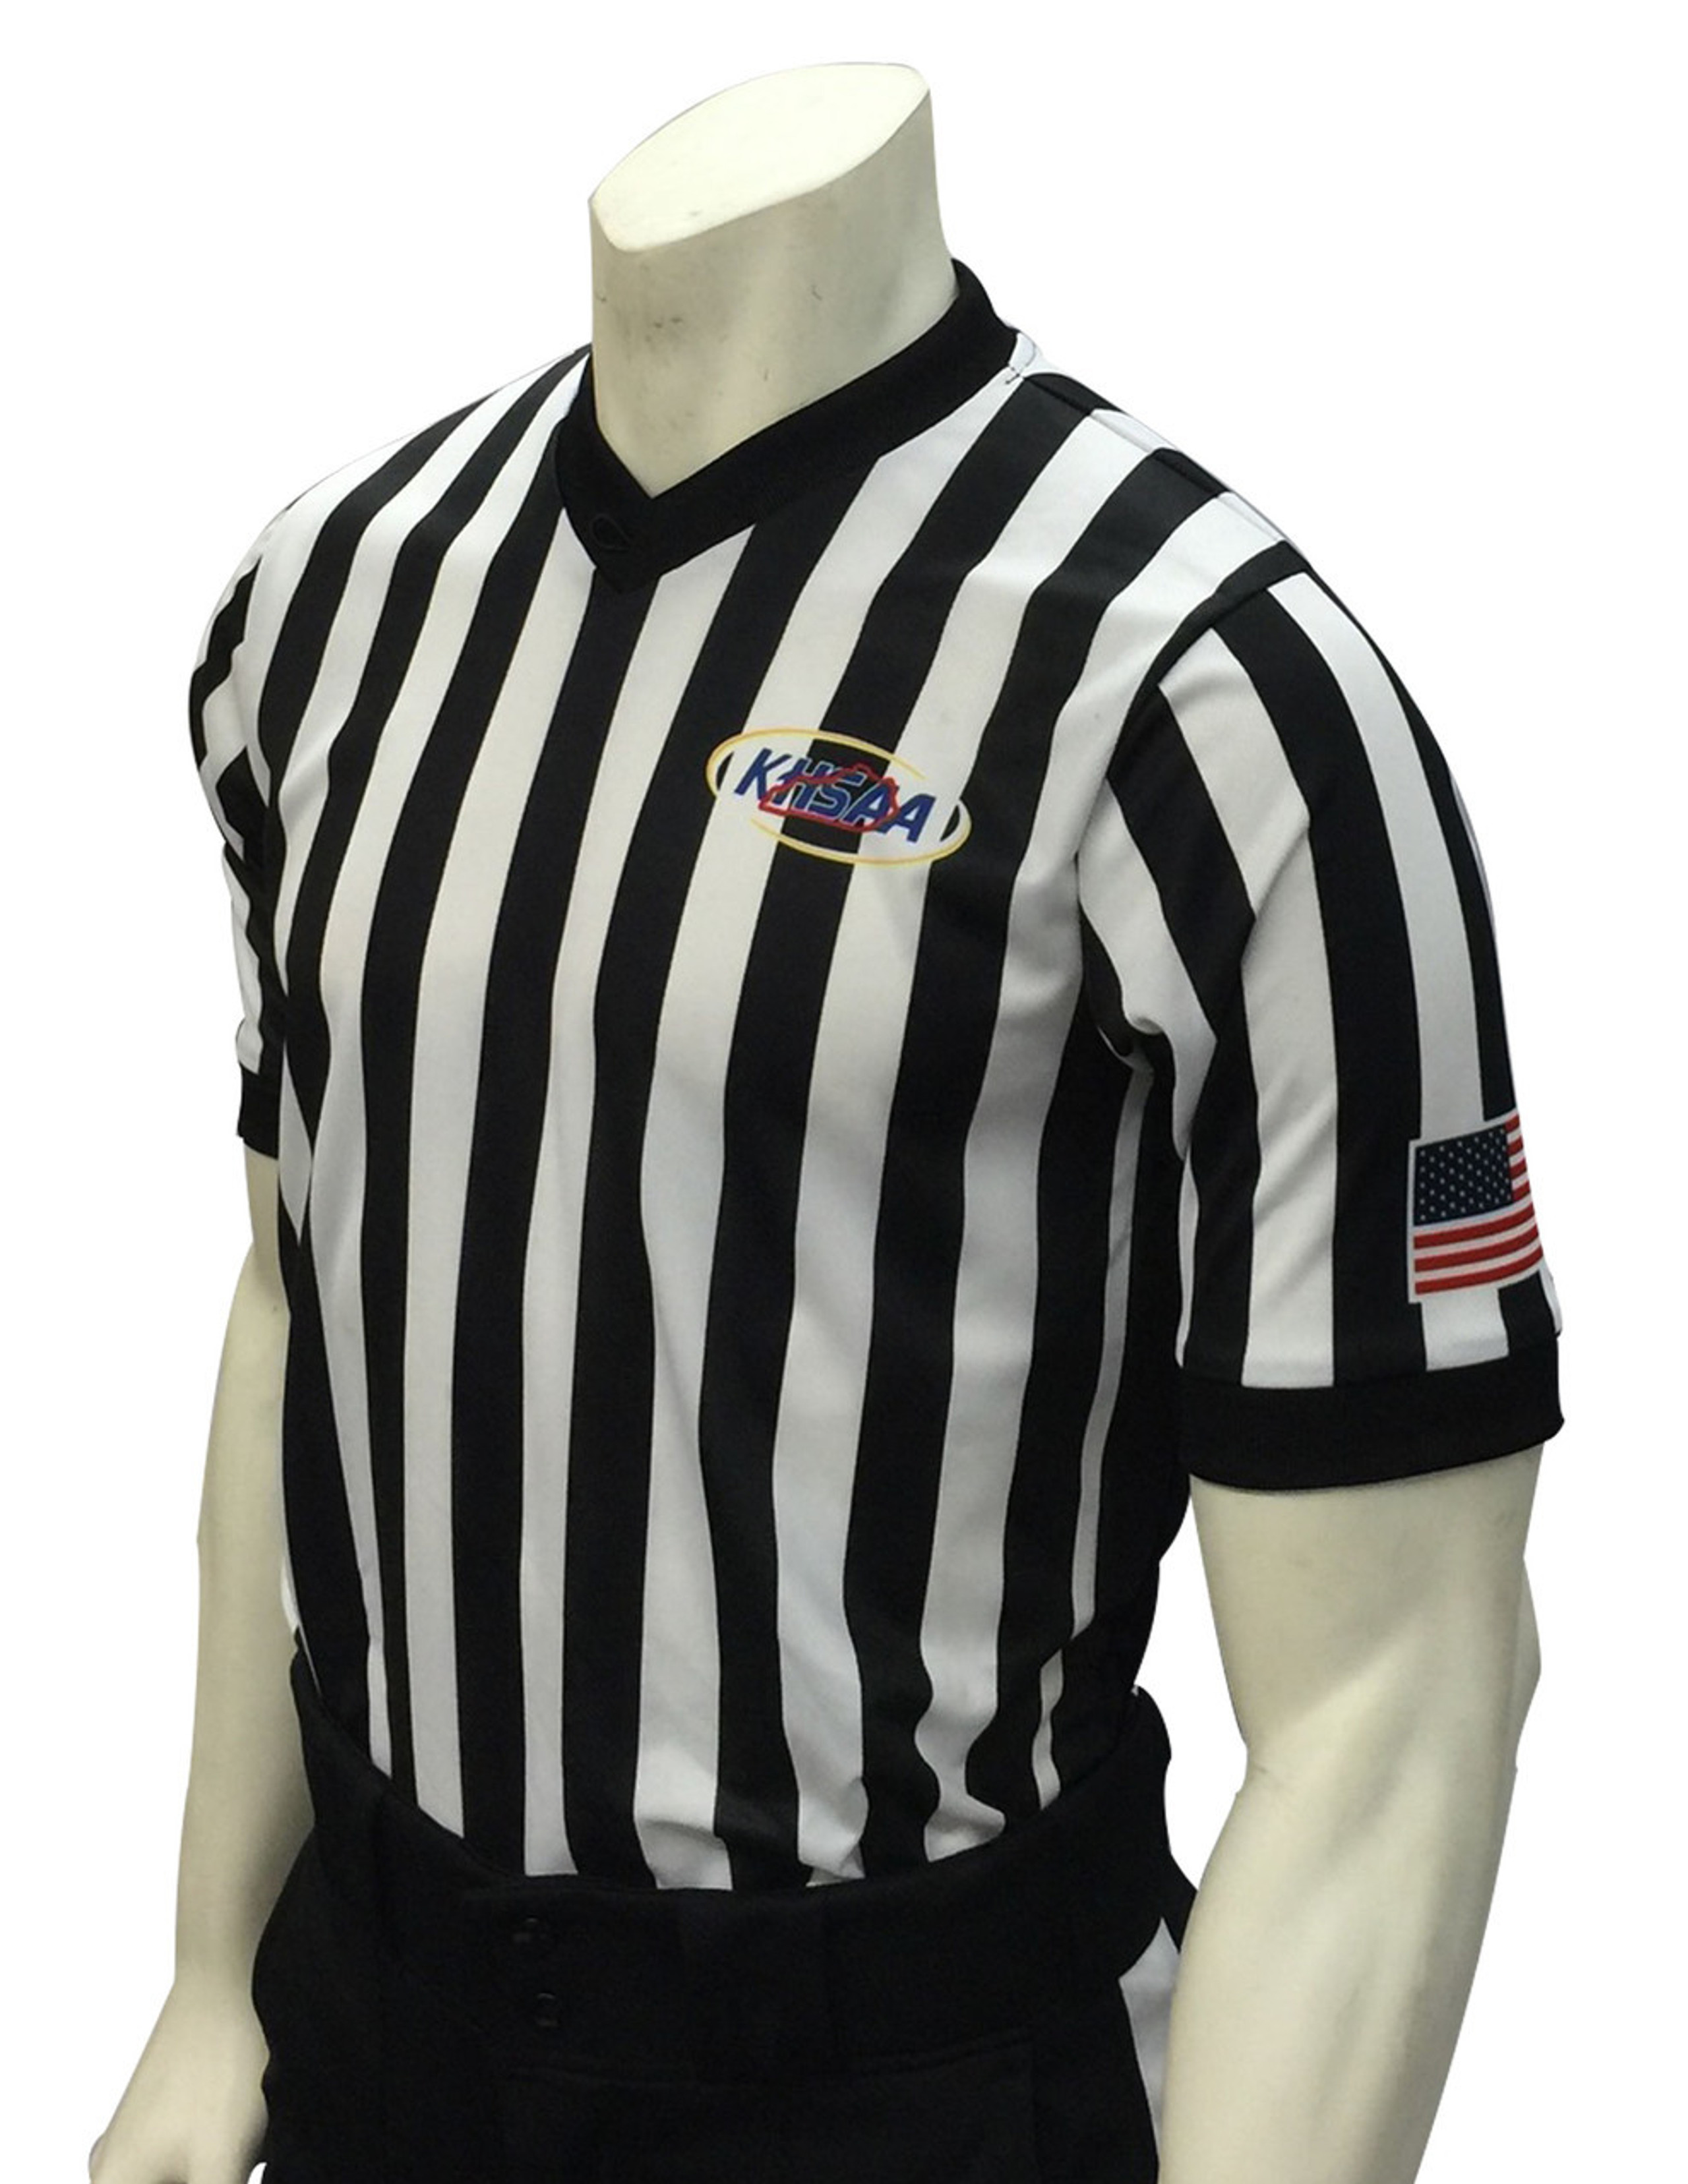 Referee Equipment | Umpire Equipment | Soccer Referee Apparel